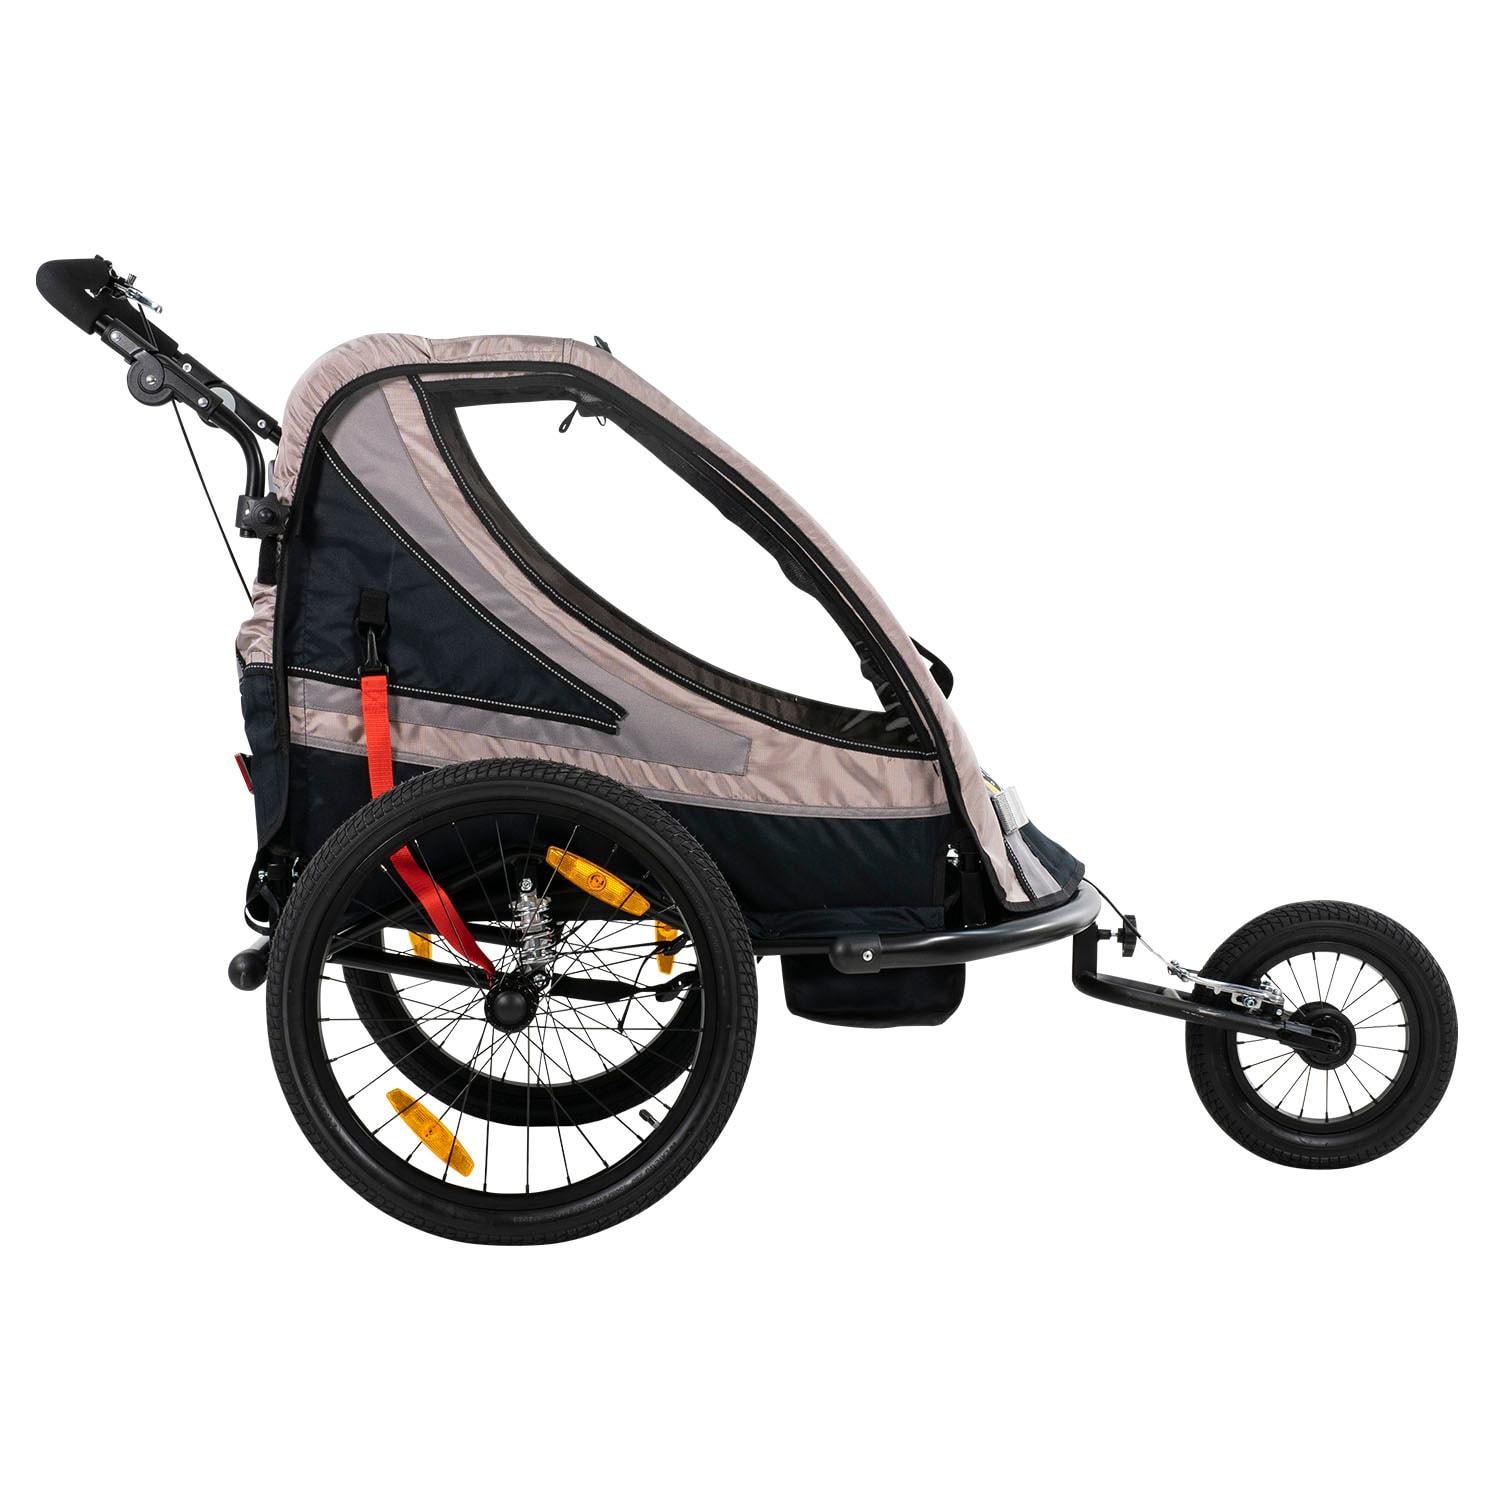 Cykelvagn SunBee Supreme XL, med strollerkit